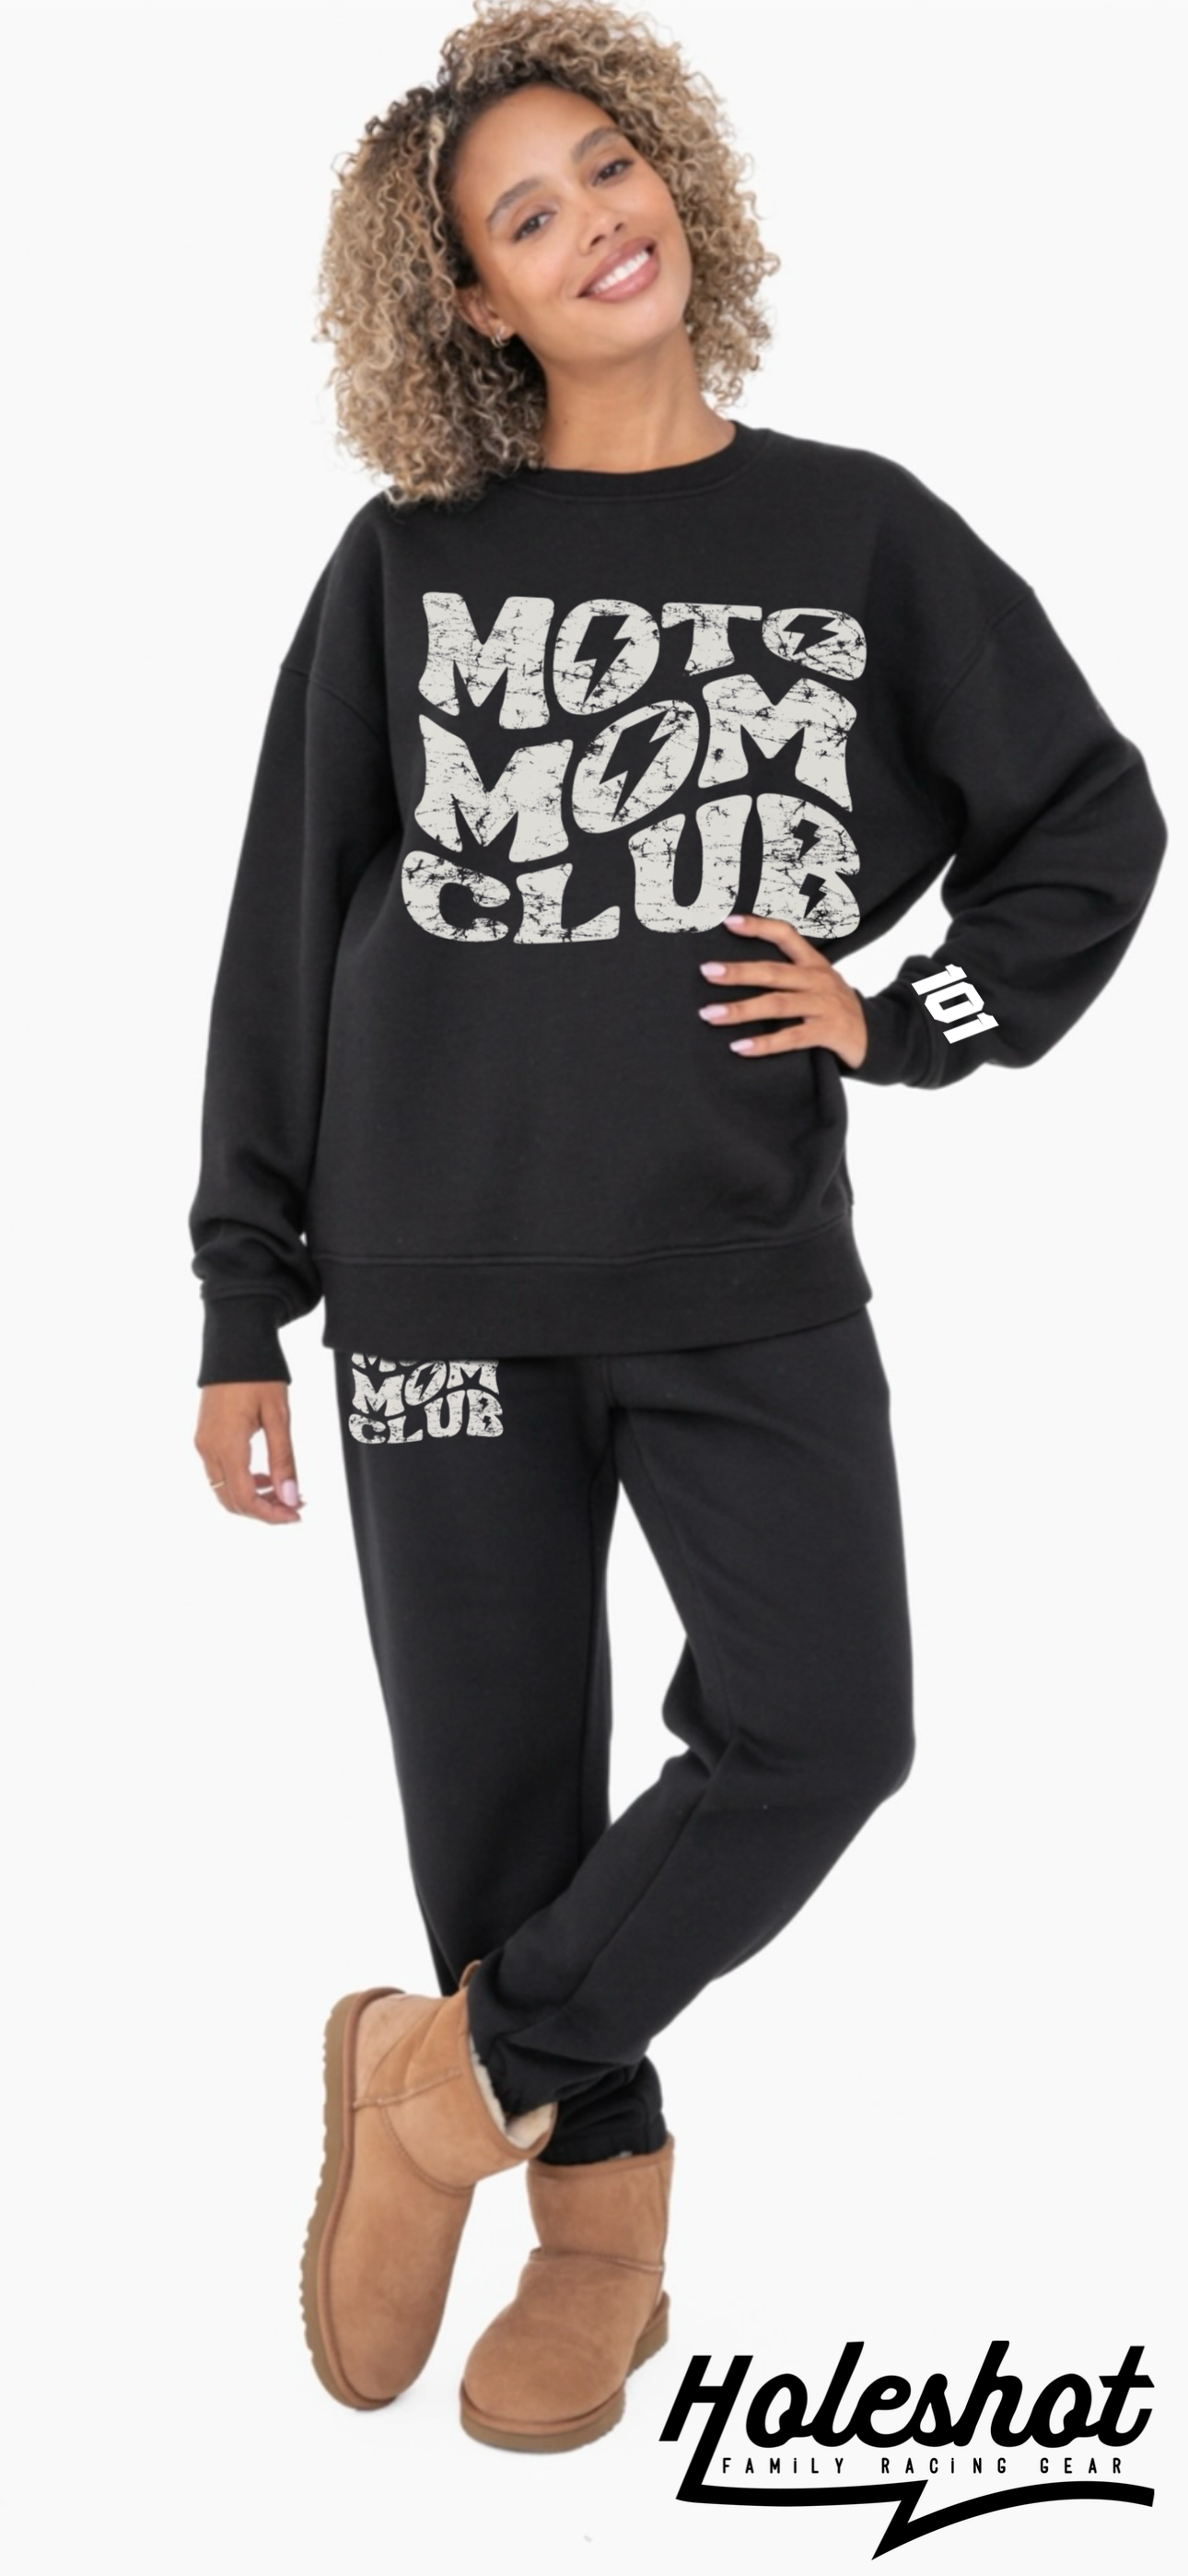 Moto Mom Club Jogger Set